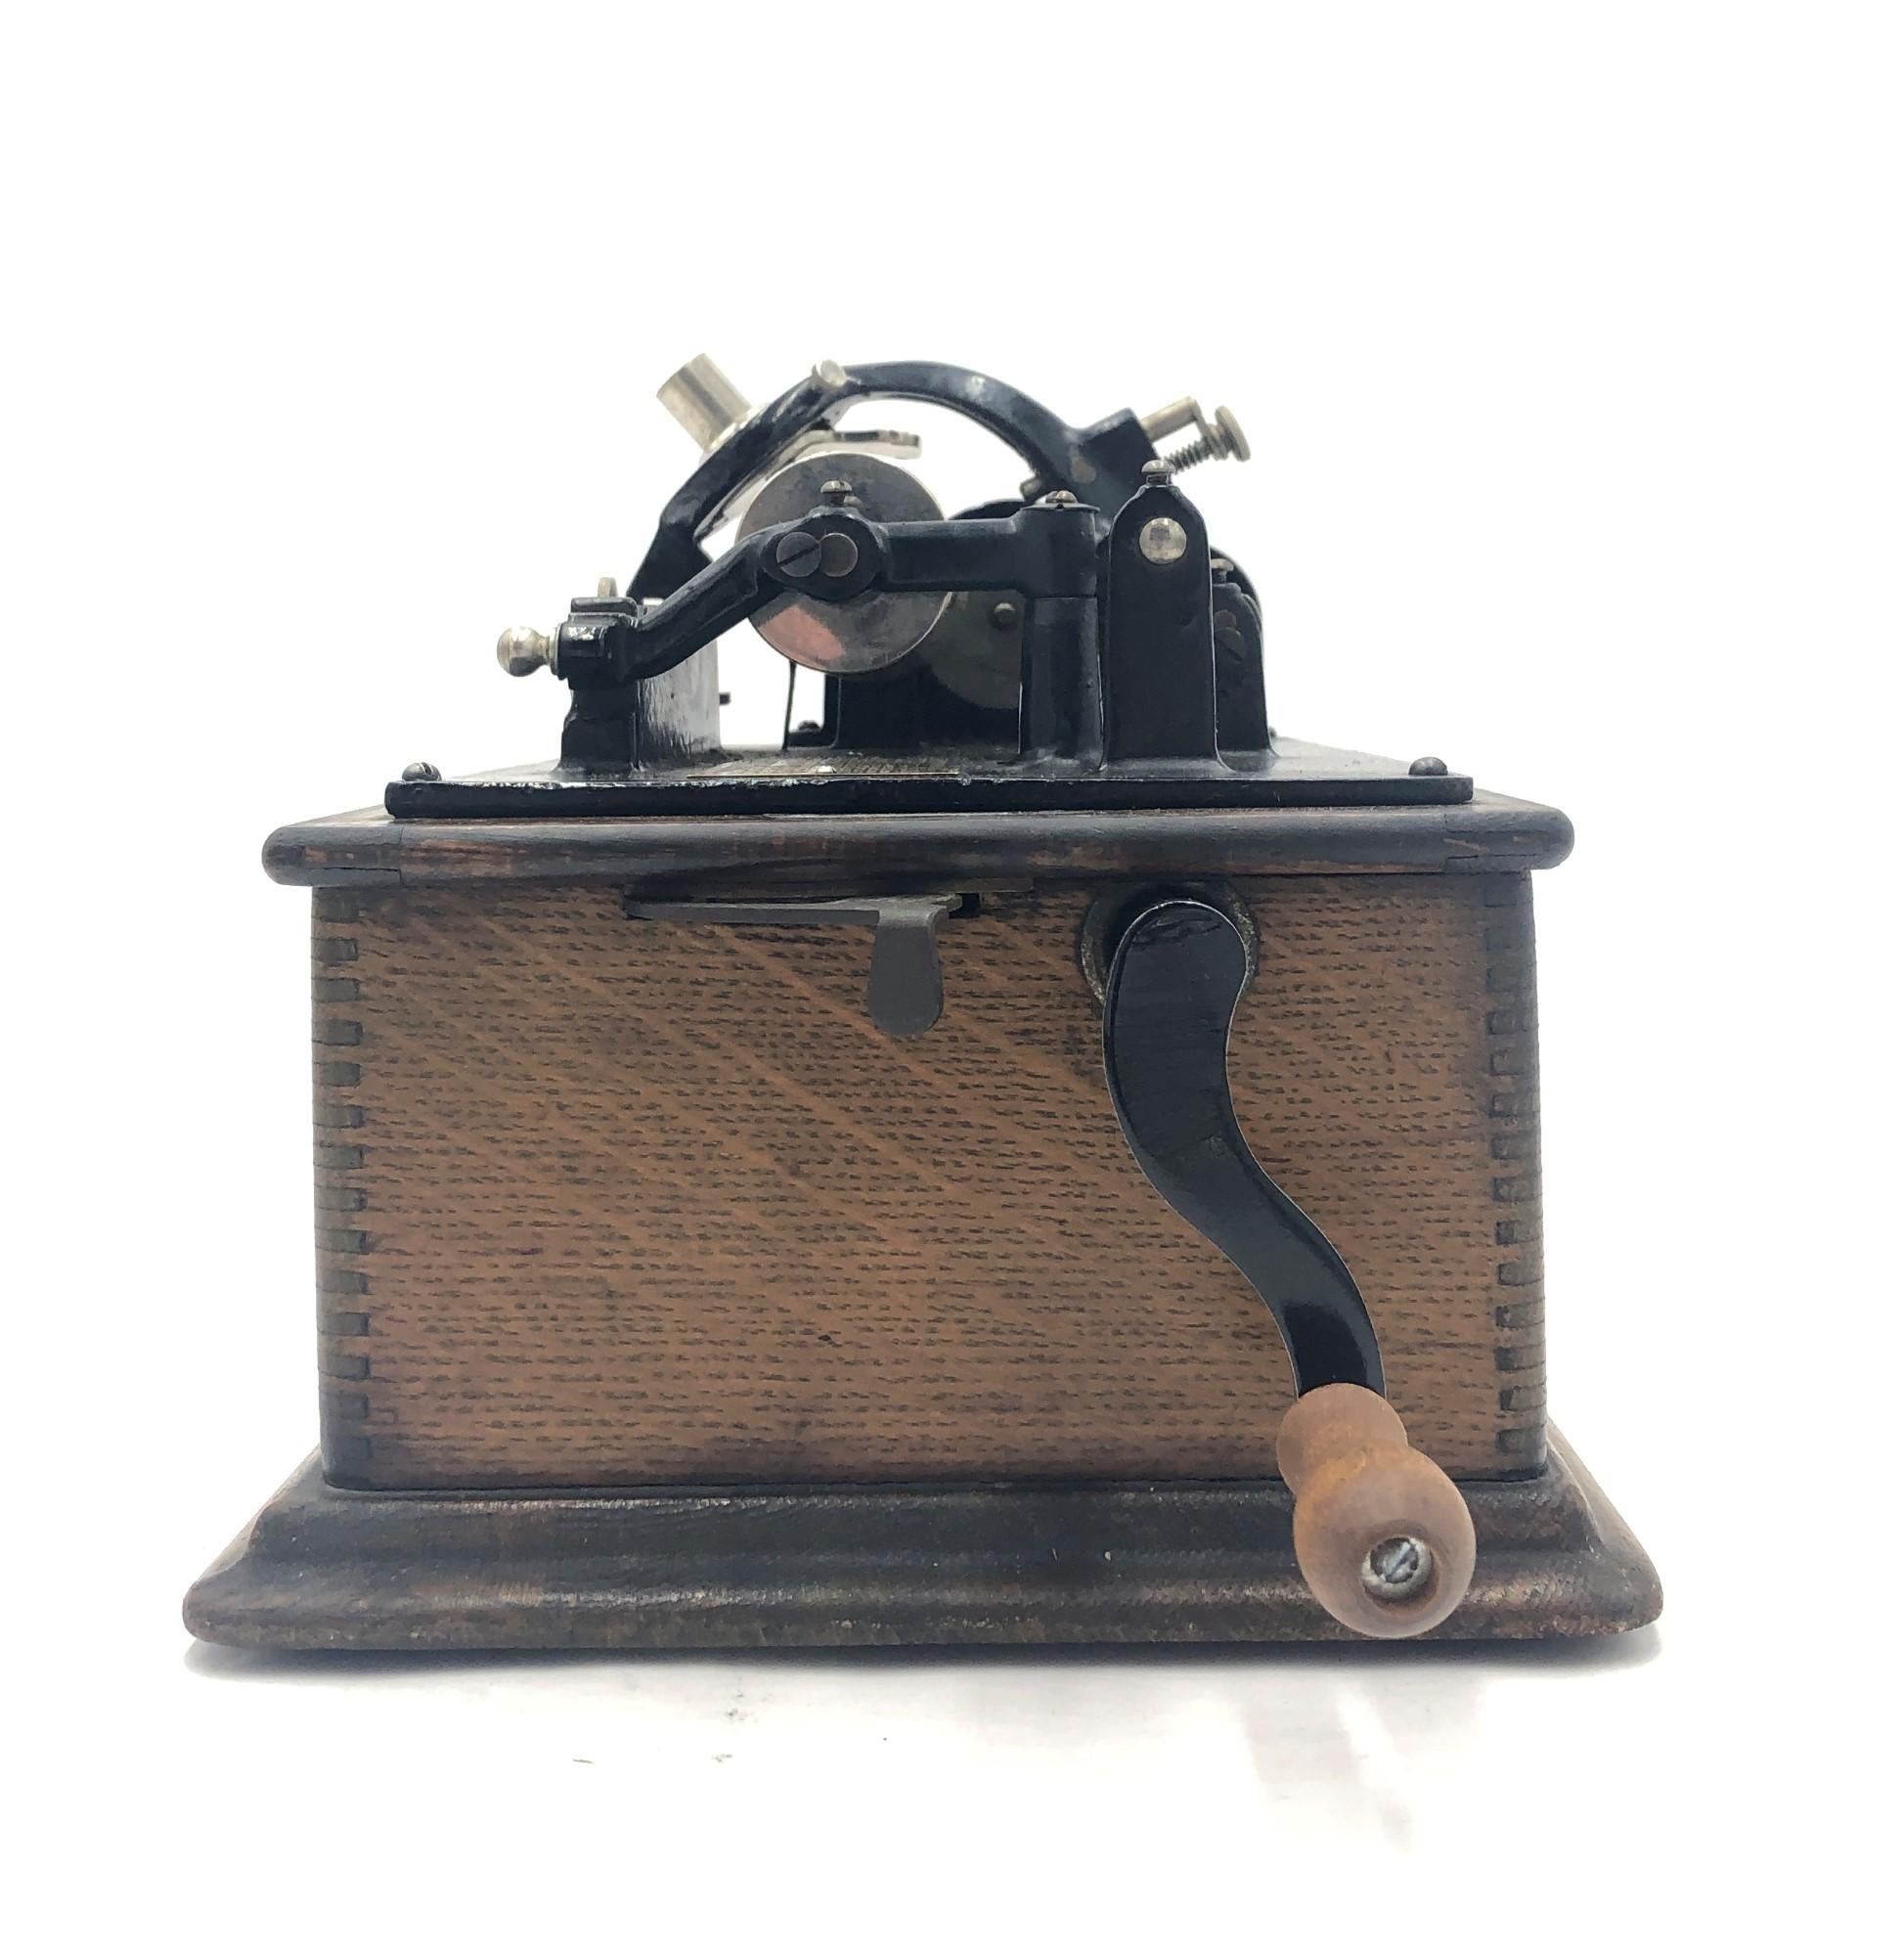 Working 1903 Edison Standard Cylinder Phonograph Manual Hand Crank 3